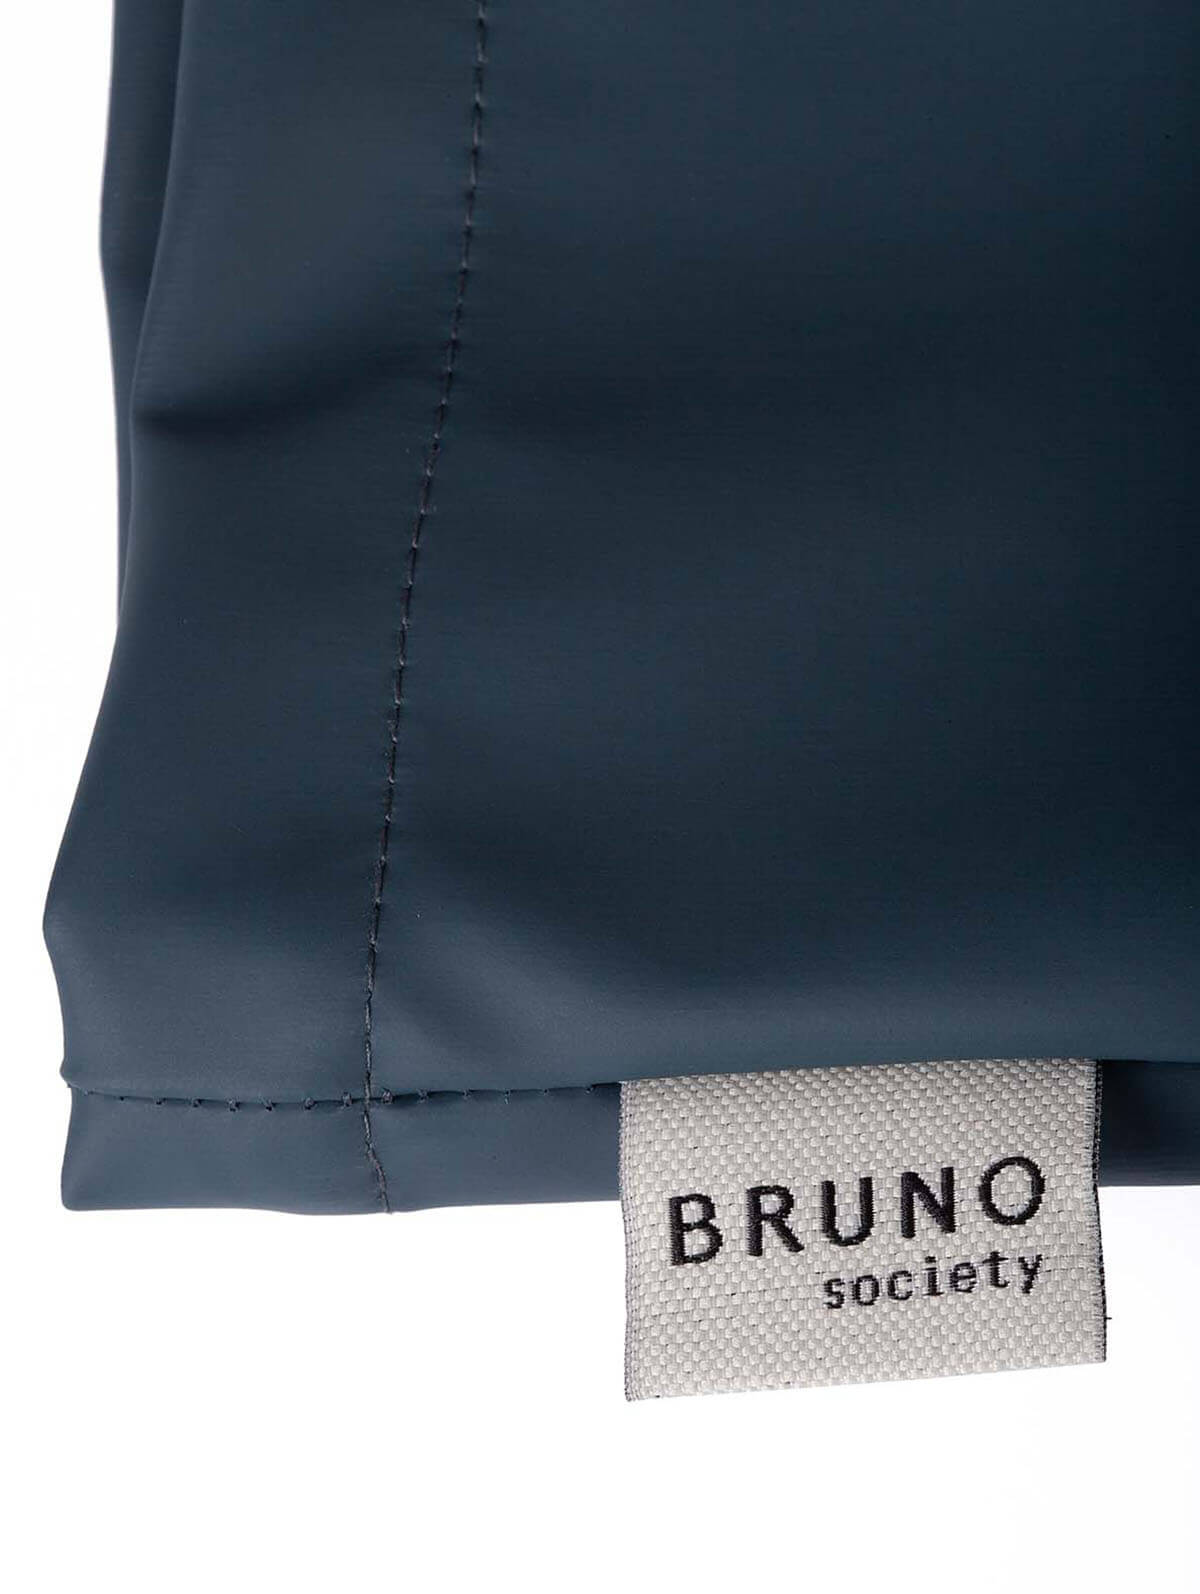 Bruno Society Lightweight Raincoat